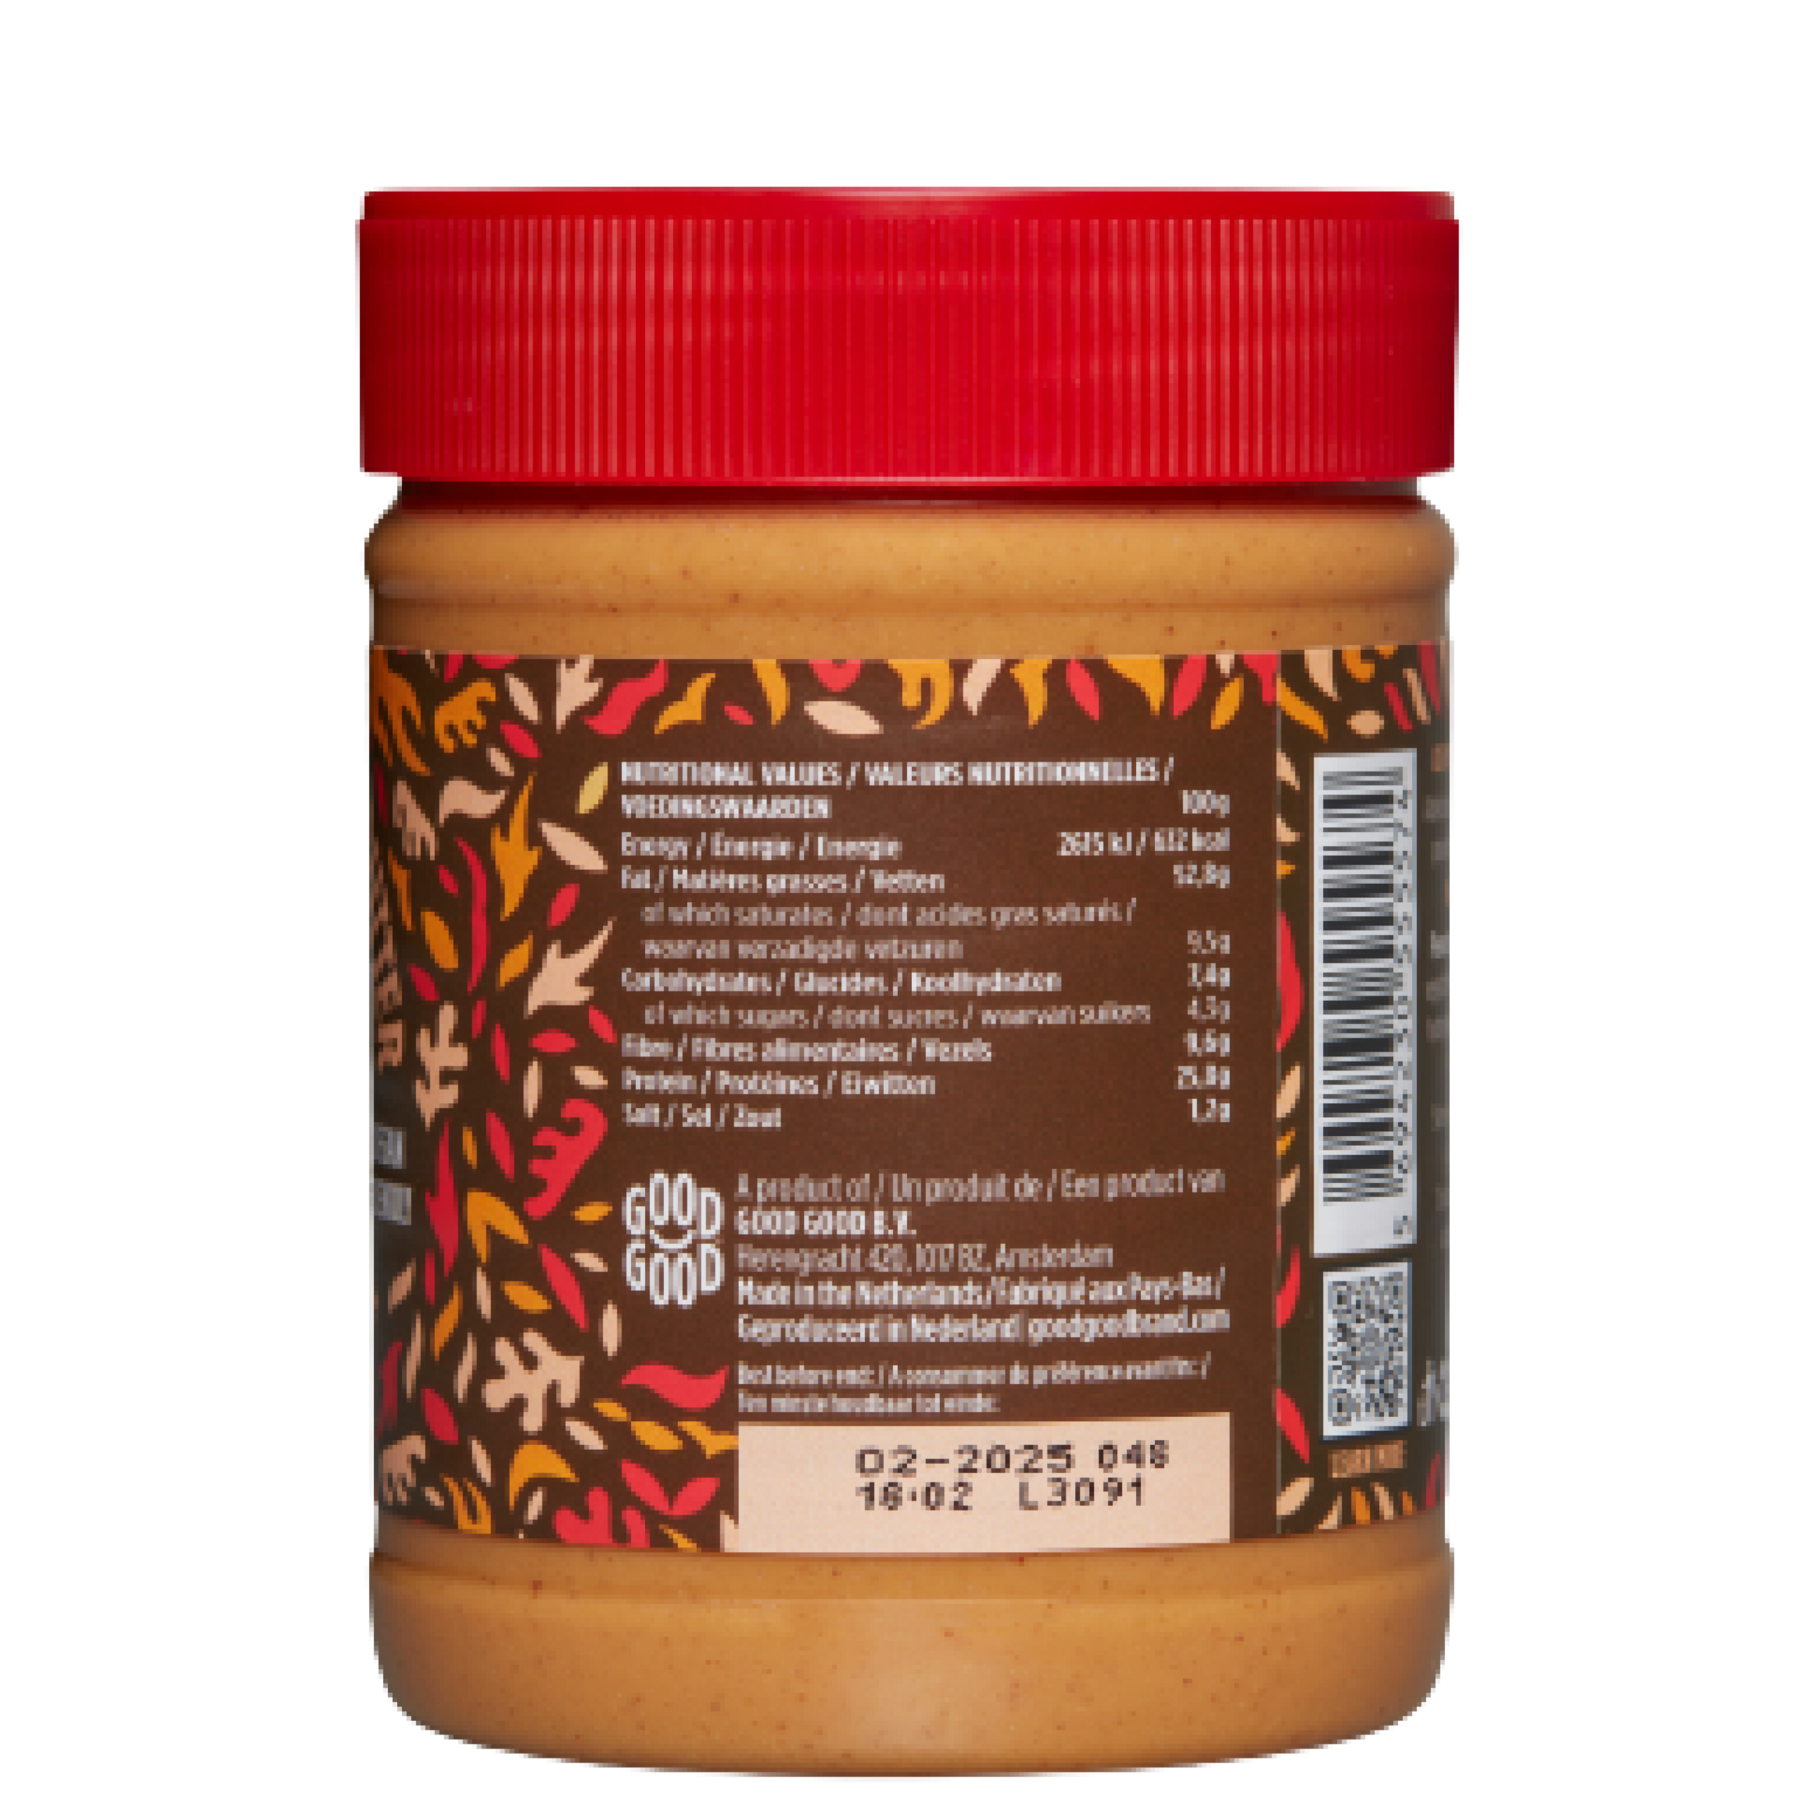 Creamy Peanut Butter (340g) - No Added Sugar